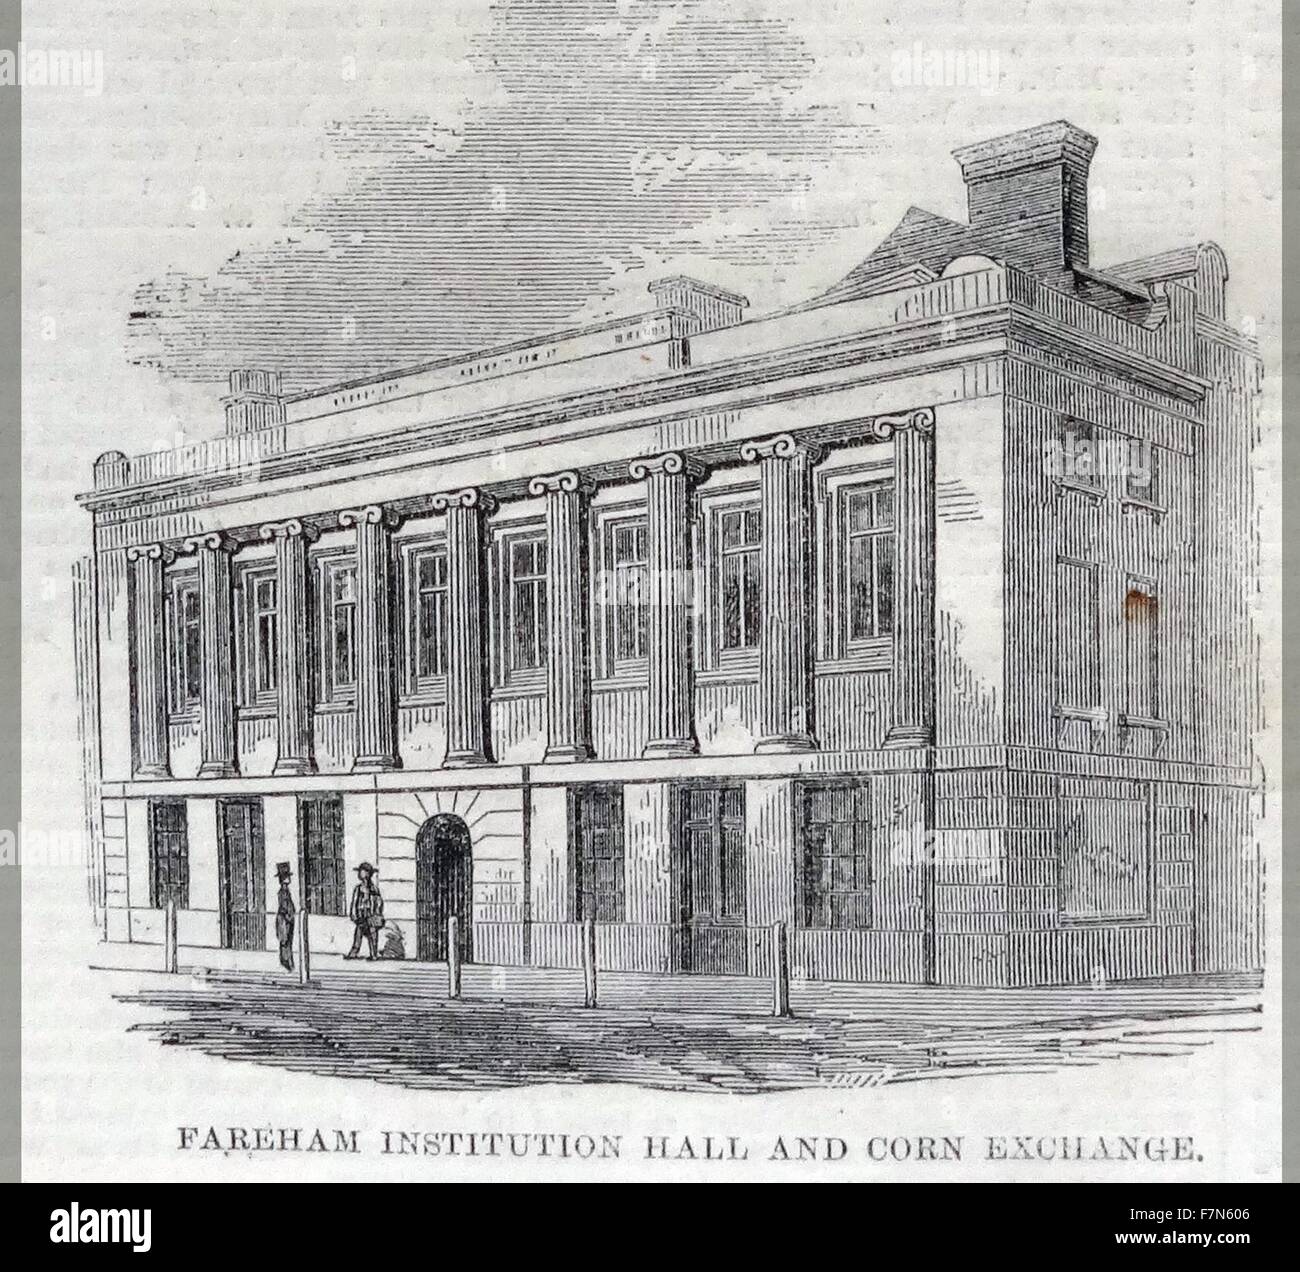 Fareham Institution Hall and Corn Exchange. 1860 Stock Photo